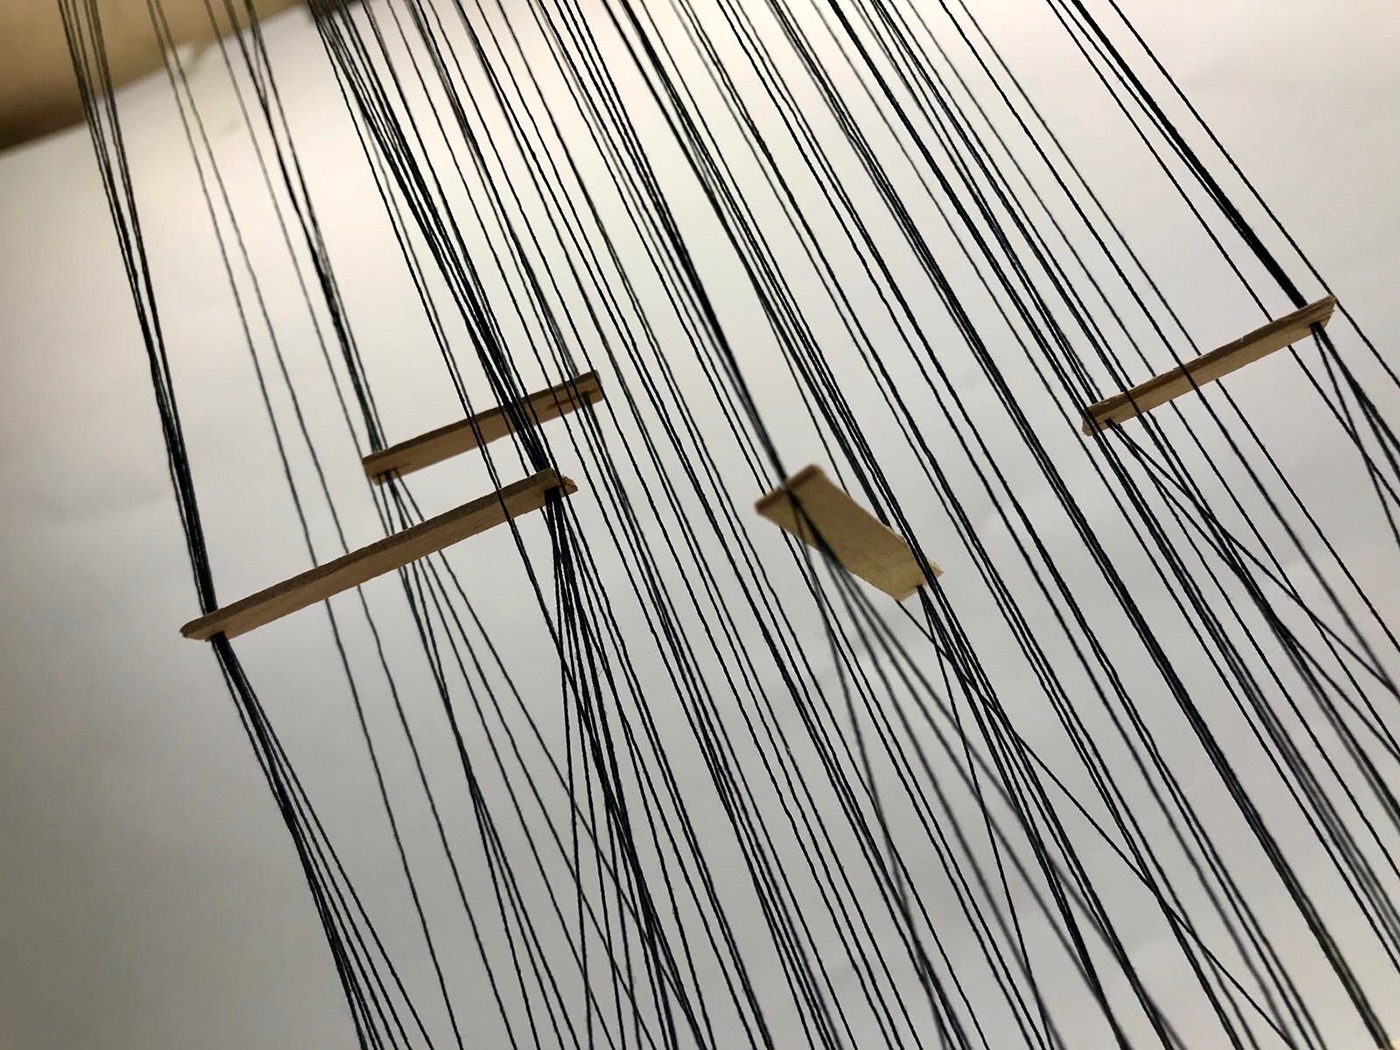 thin thread flexible surreal translucent light structure installation